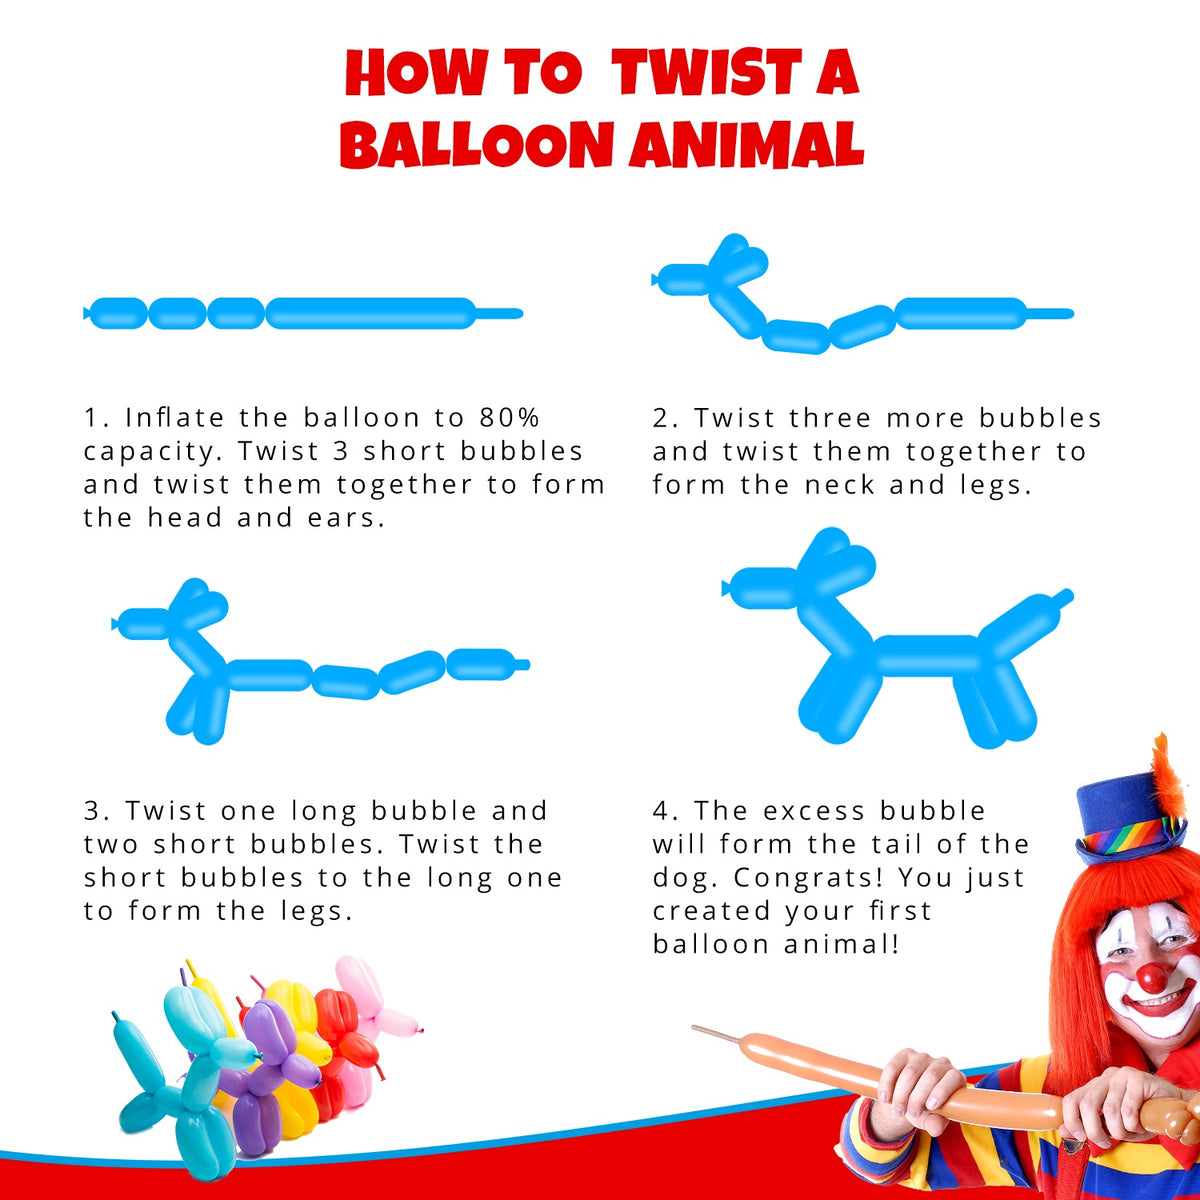 Clownatex 260 Twisting Balloons - Teal (100/bag)